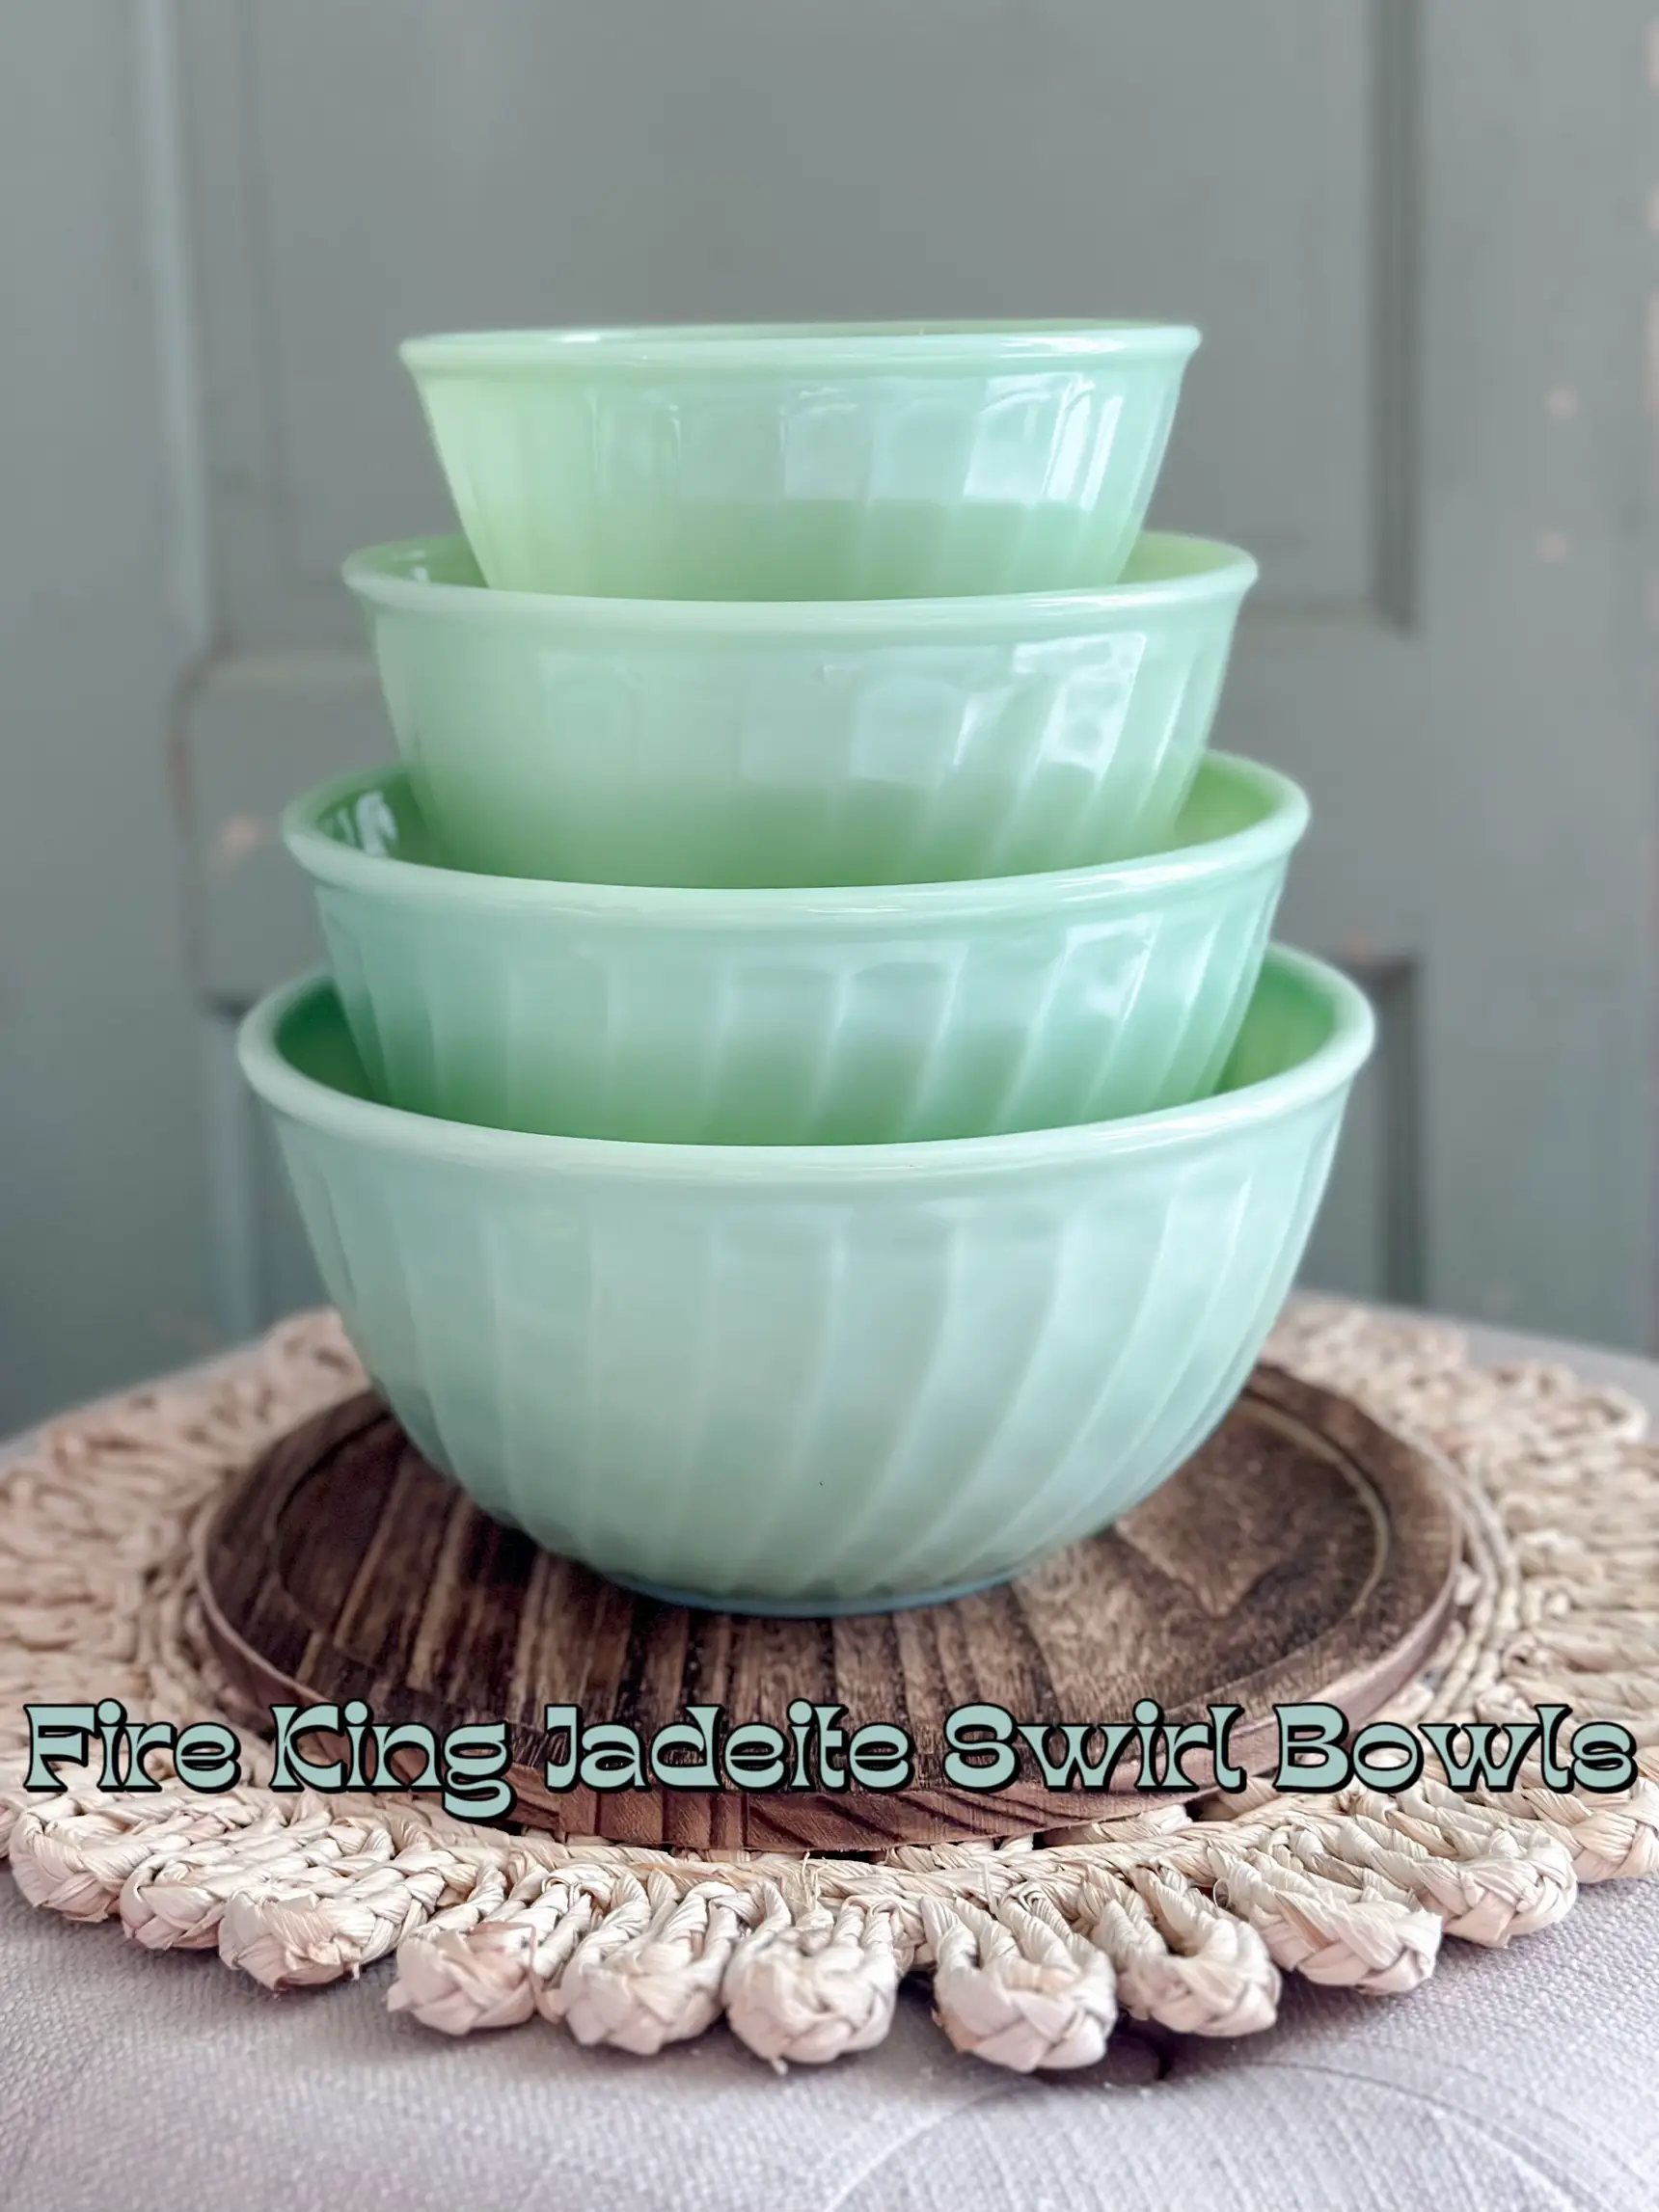 Fire king jadeite retro vintage green dishes 